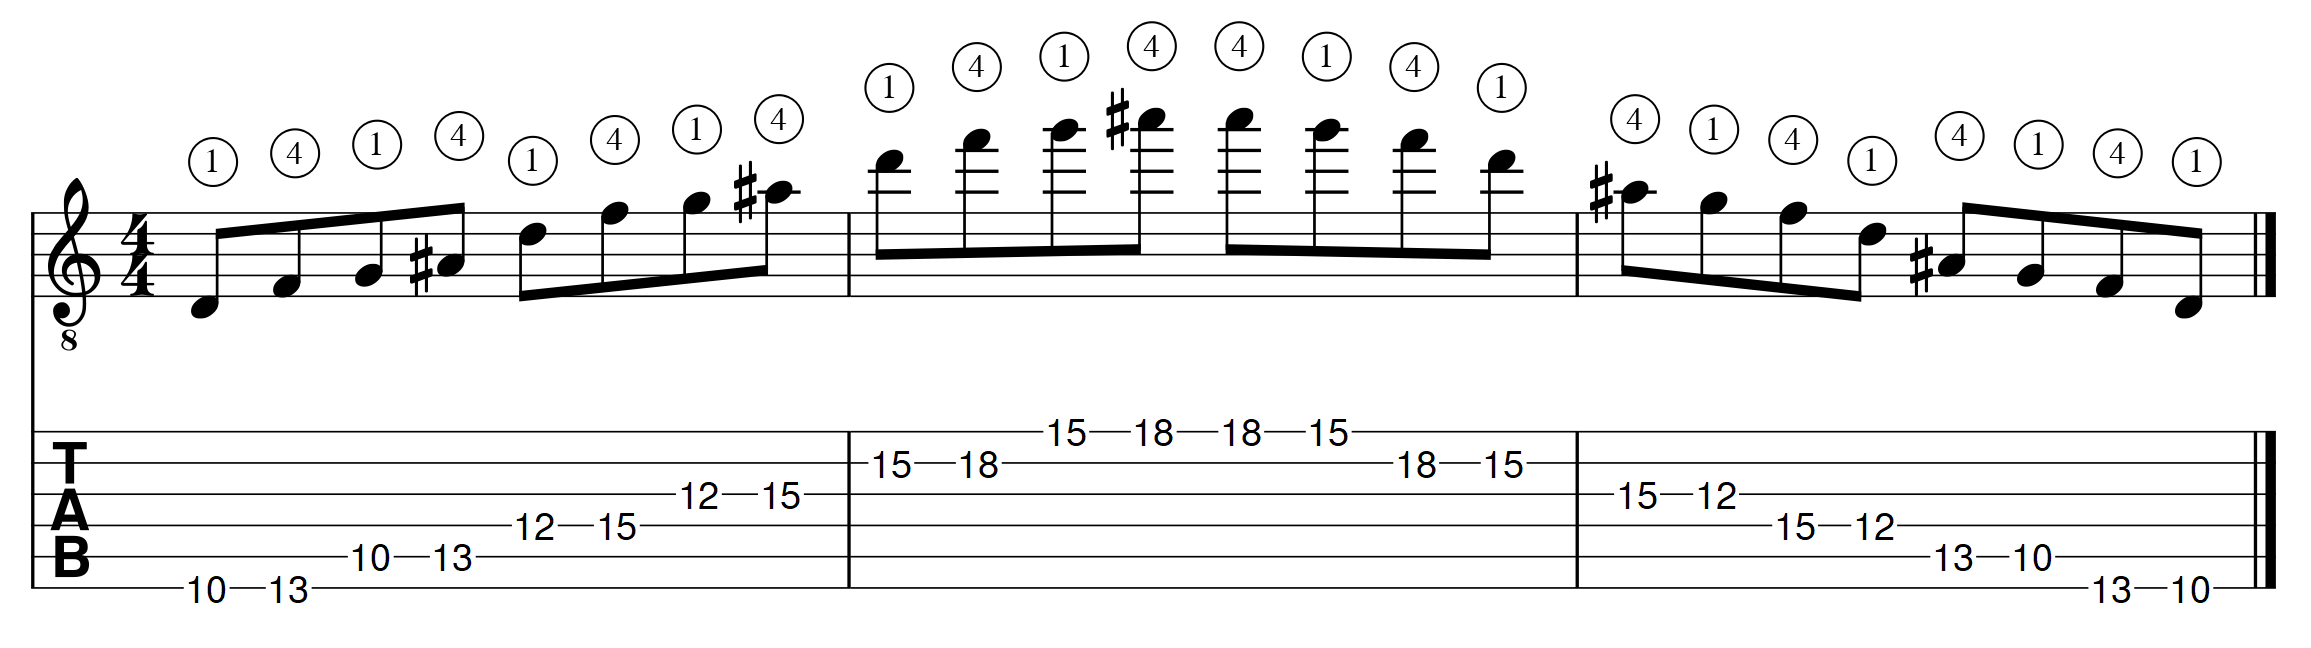 sol mineur 7 position 2 horizontale 1 apprendre la guitare